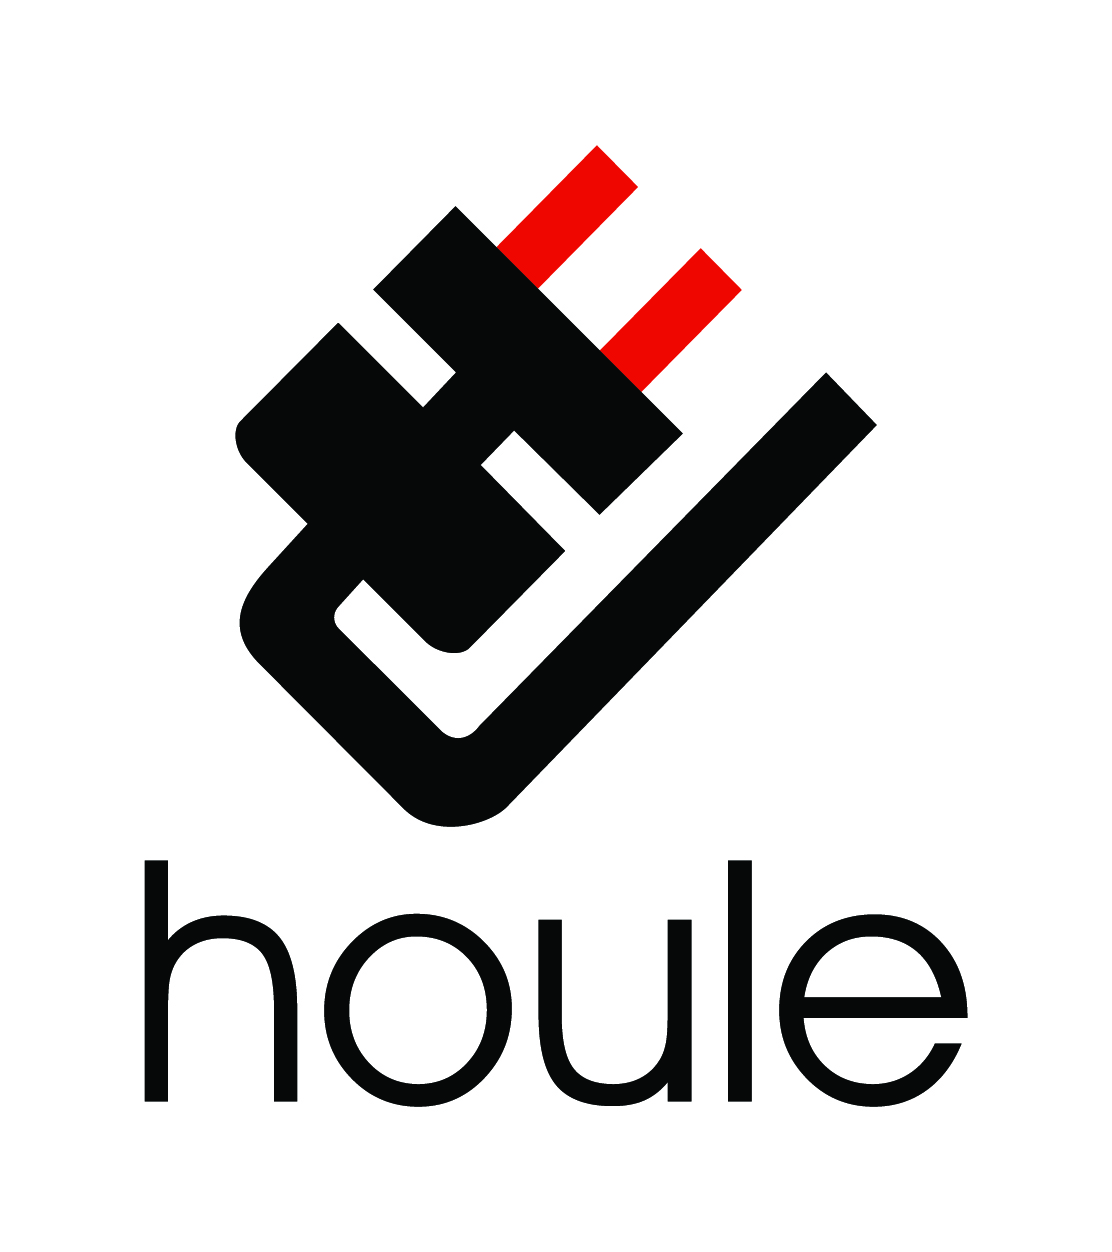 HOULE ELECTRIC LTD